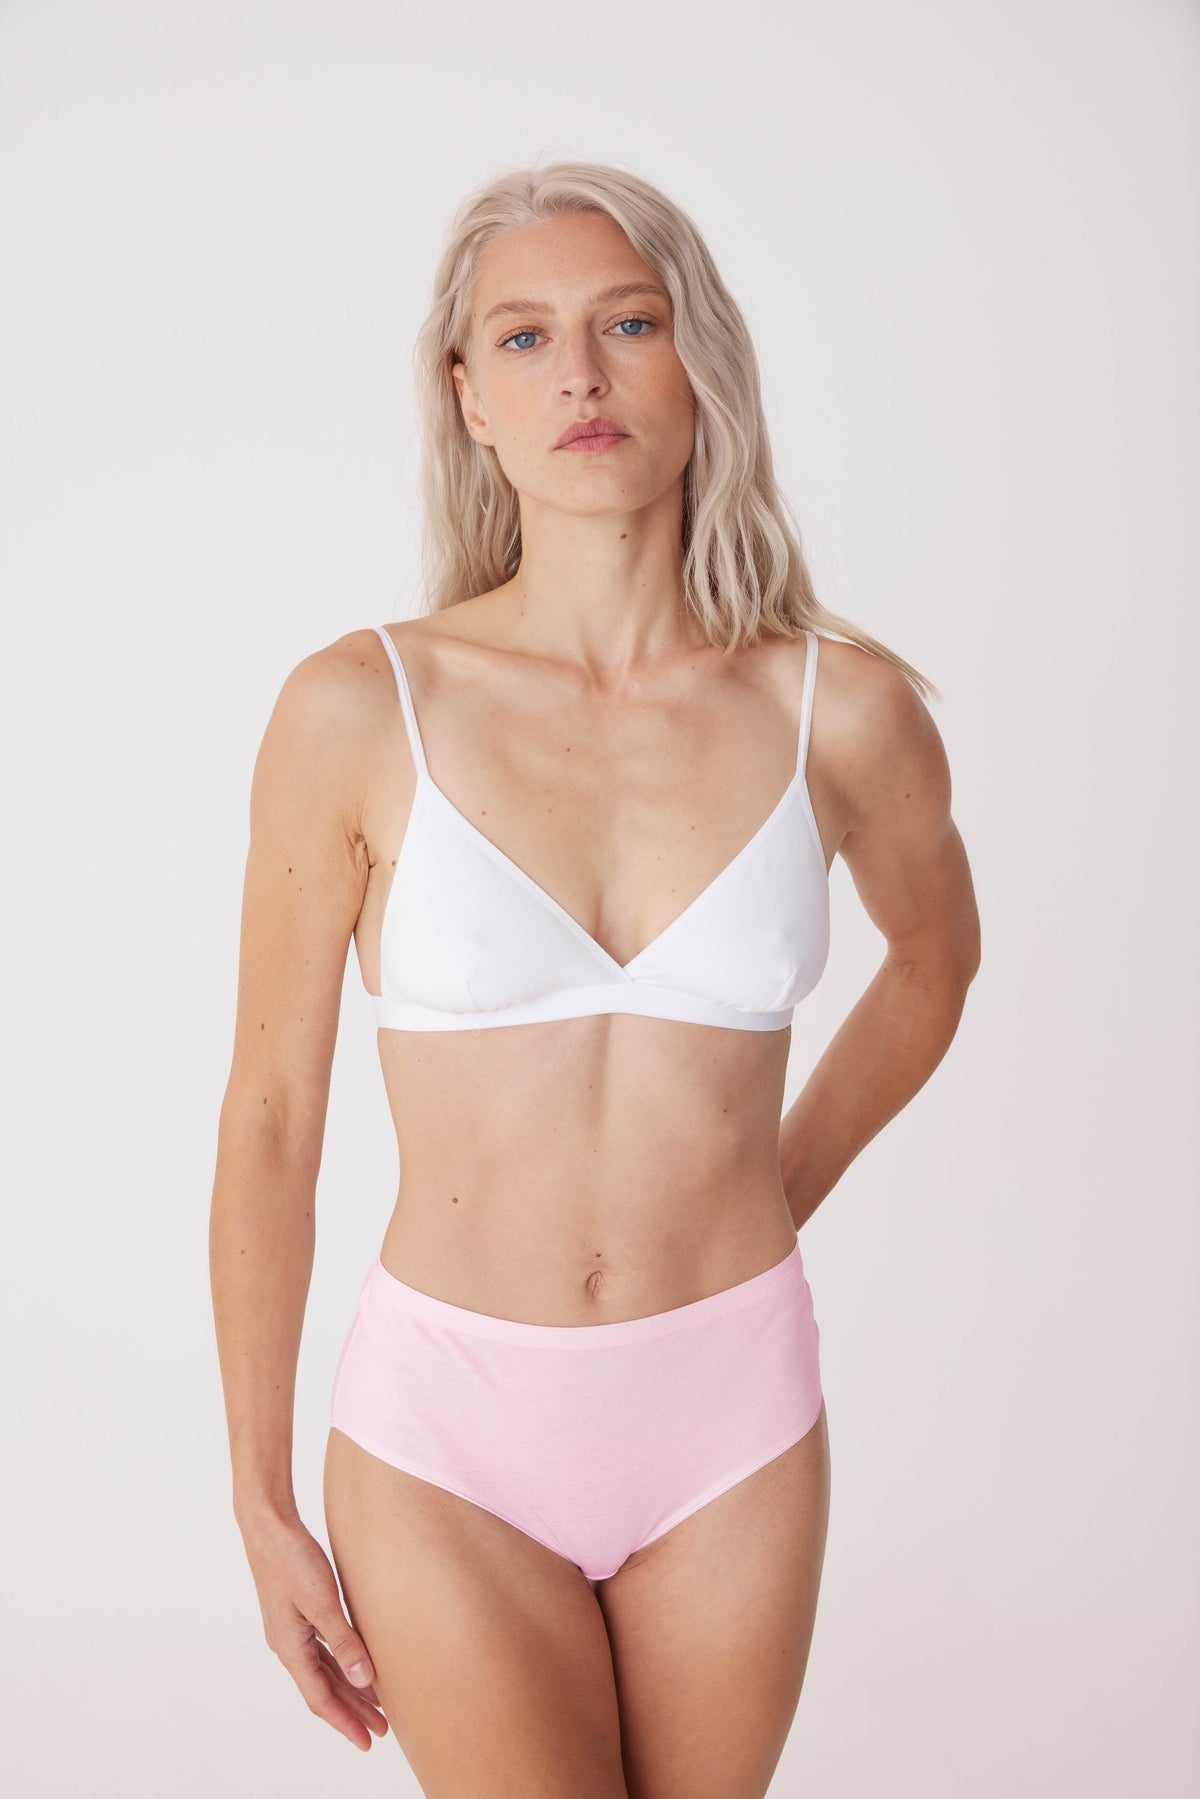 
            white, blonde female in soft pink high rise brief